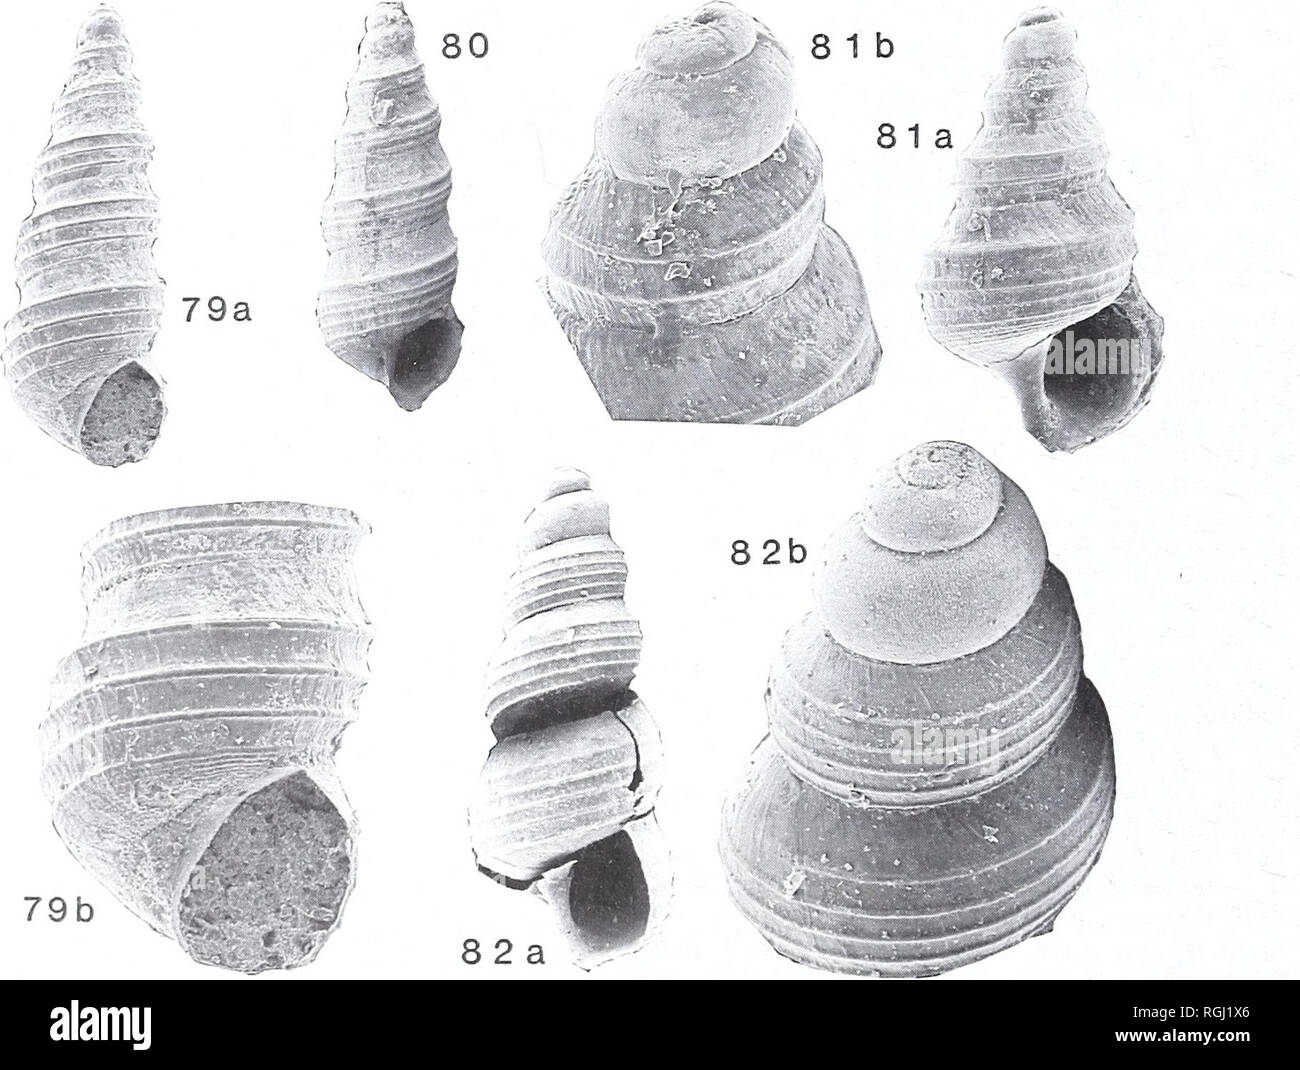 . Bulletin of the British Museum (Natural History). Geology.. C. P. NUTTALL Figs 75-78 Dyris tricarinata (Boettger). San Cayetano Formation, presumed Miocene; Loc. JW 424, Loja Basin, Ecuador; all x 10. 76, GG21706. 77, GG21707. 78, GG21708.. Figs 79-82 Dyris hauxwelli sp. nov. Pebasian. 79-81, Pichana, Peru; Hauxwell Colin. 79, holotype, GG19792; a, front, x 25; b, apertural region, x 50. 80, paratype, GG21627; front, x 25. 81, GG21628; a, front, x 40; b, oblique view of apex, x 100. 82, GG19799; Canama, Peru; Barrington Brown Colin, a, front, x 40; b, oblique view of apex, x 75.. Please note Stock Photo